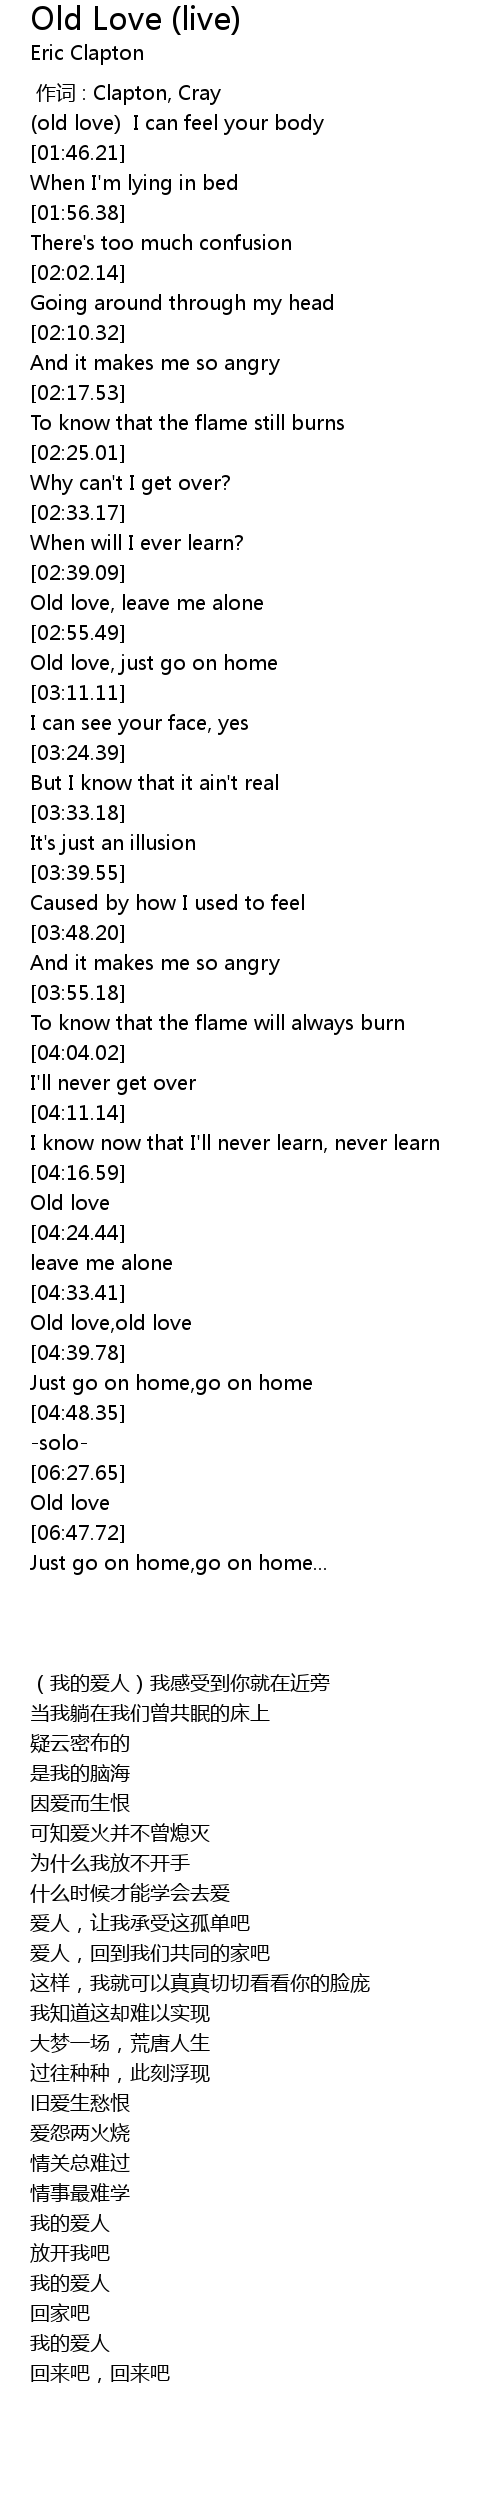 Old Love Live Lyrics Follow Lyrics